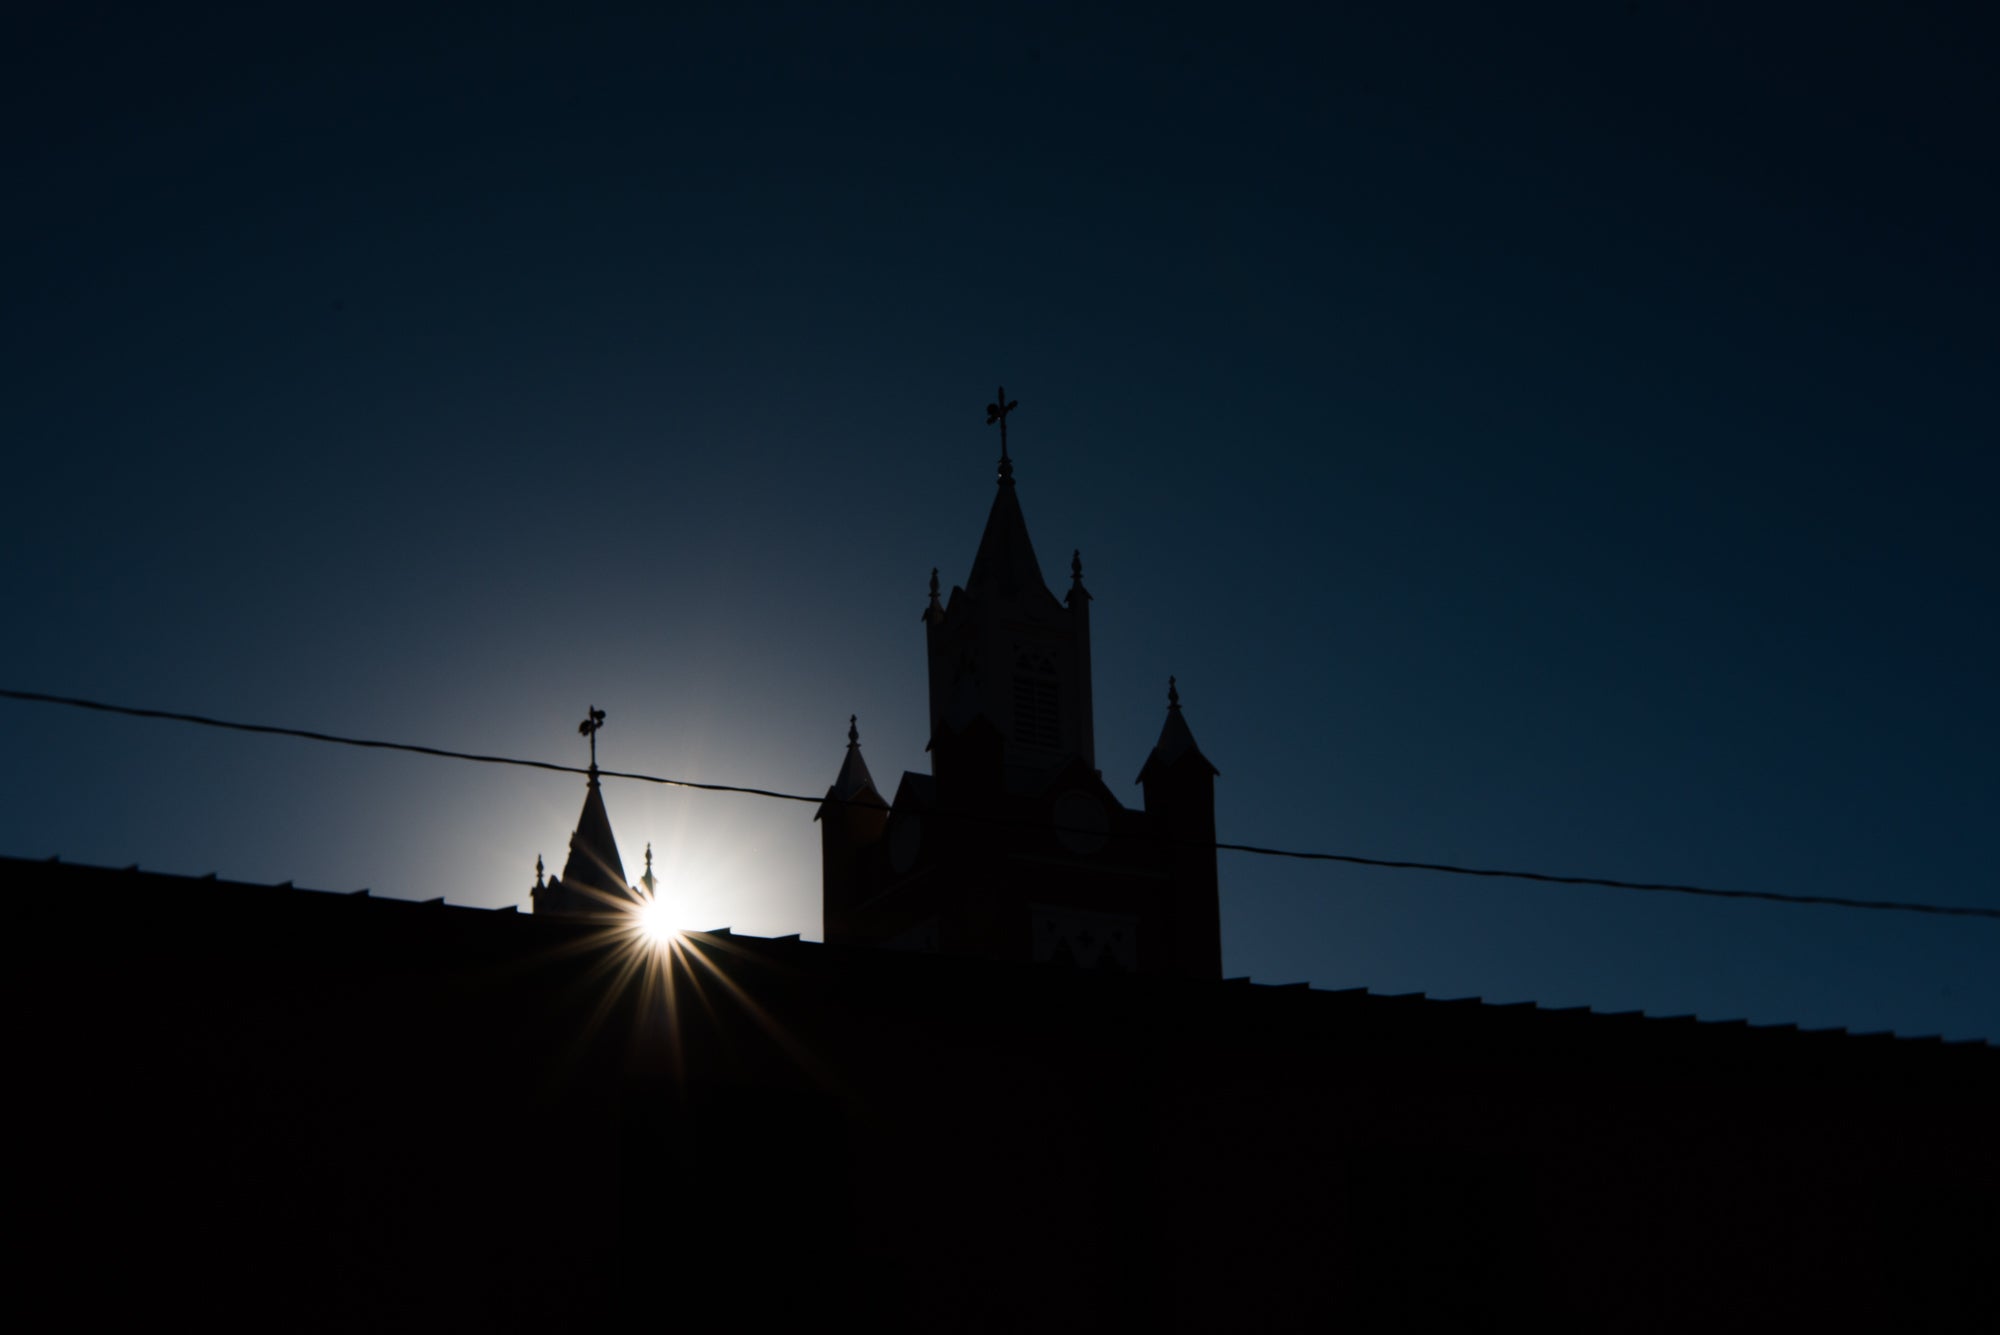 Sun rising over old town Albuquerque castle silhouette featured photos